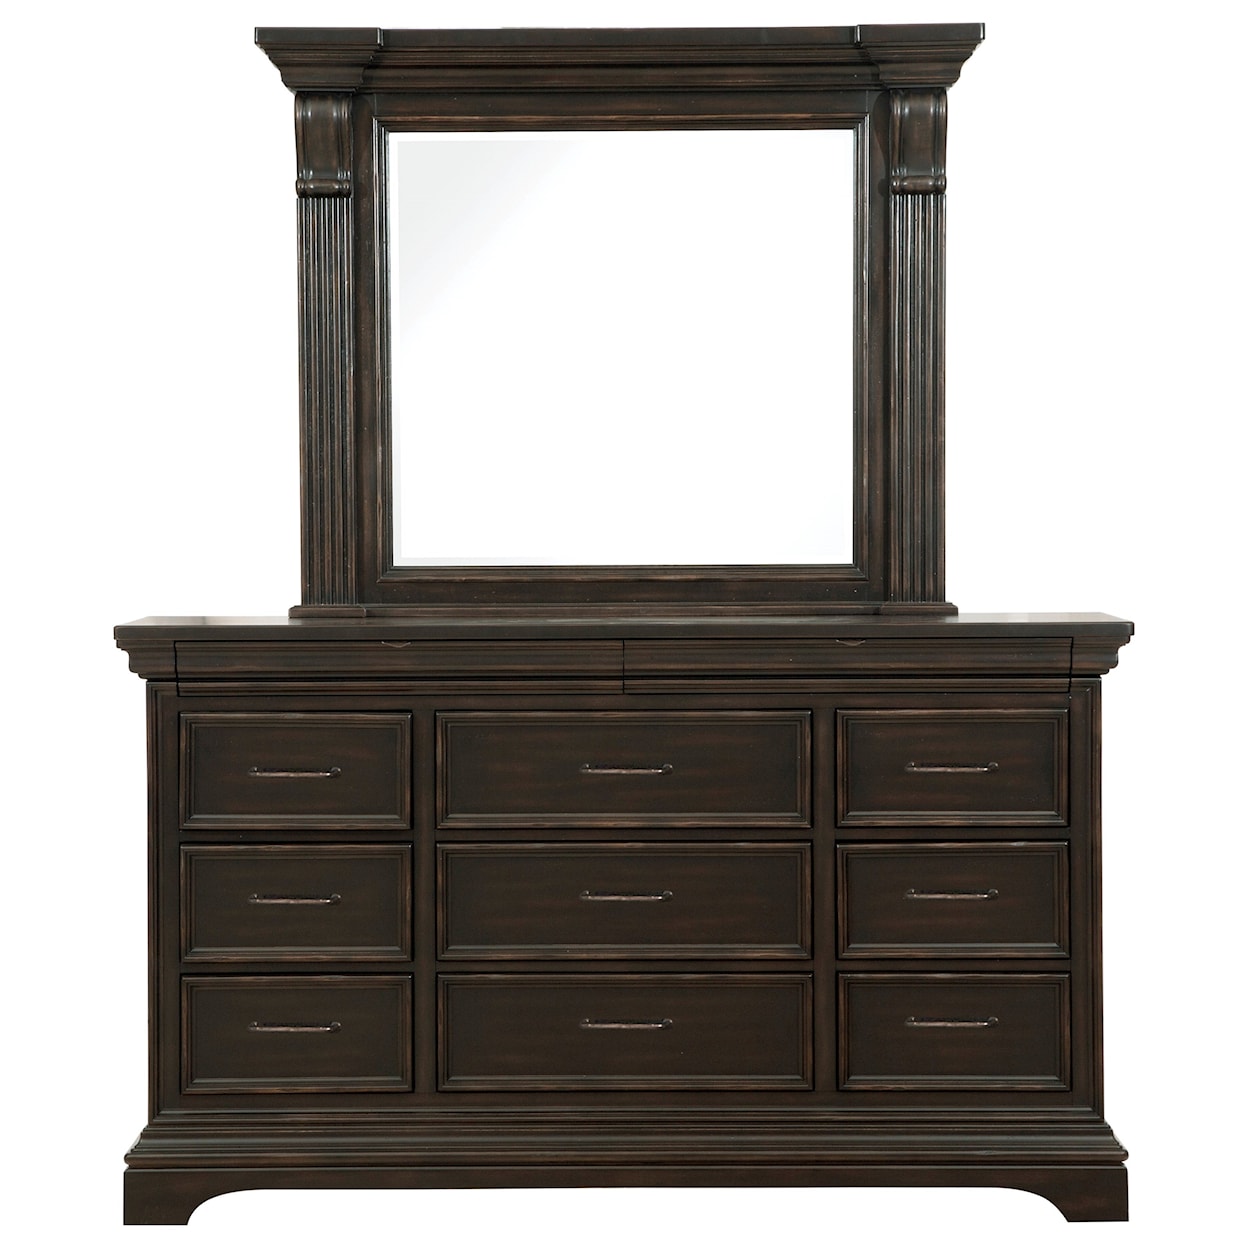 Pulaski Furniture Caldwell Dresser